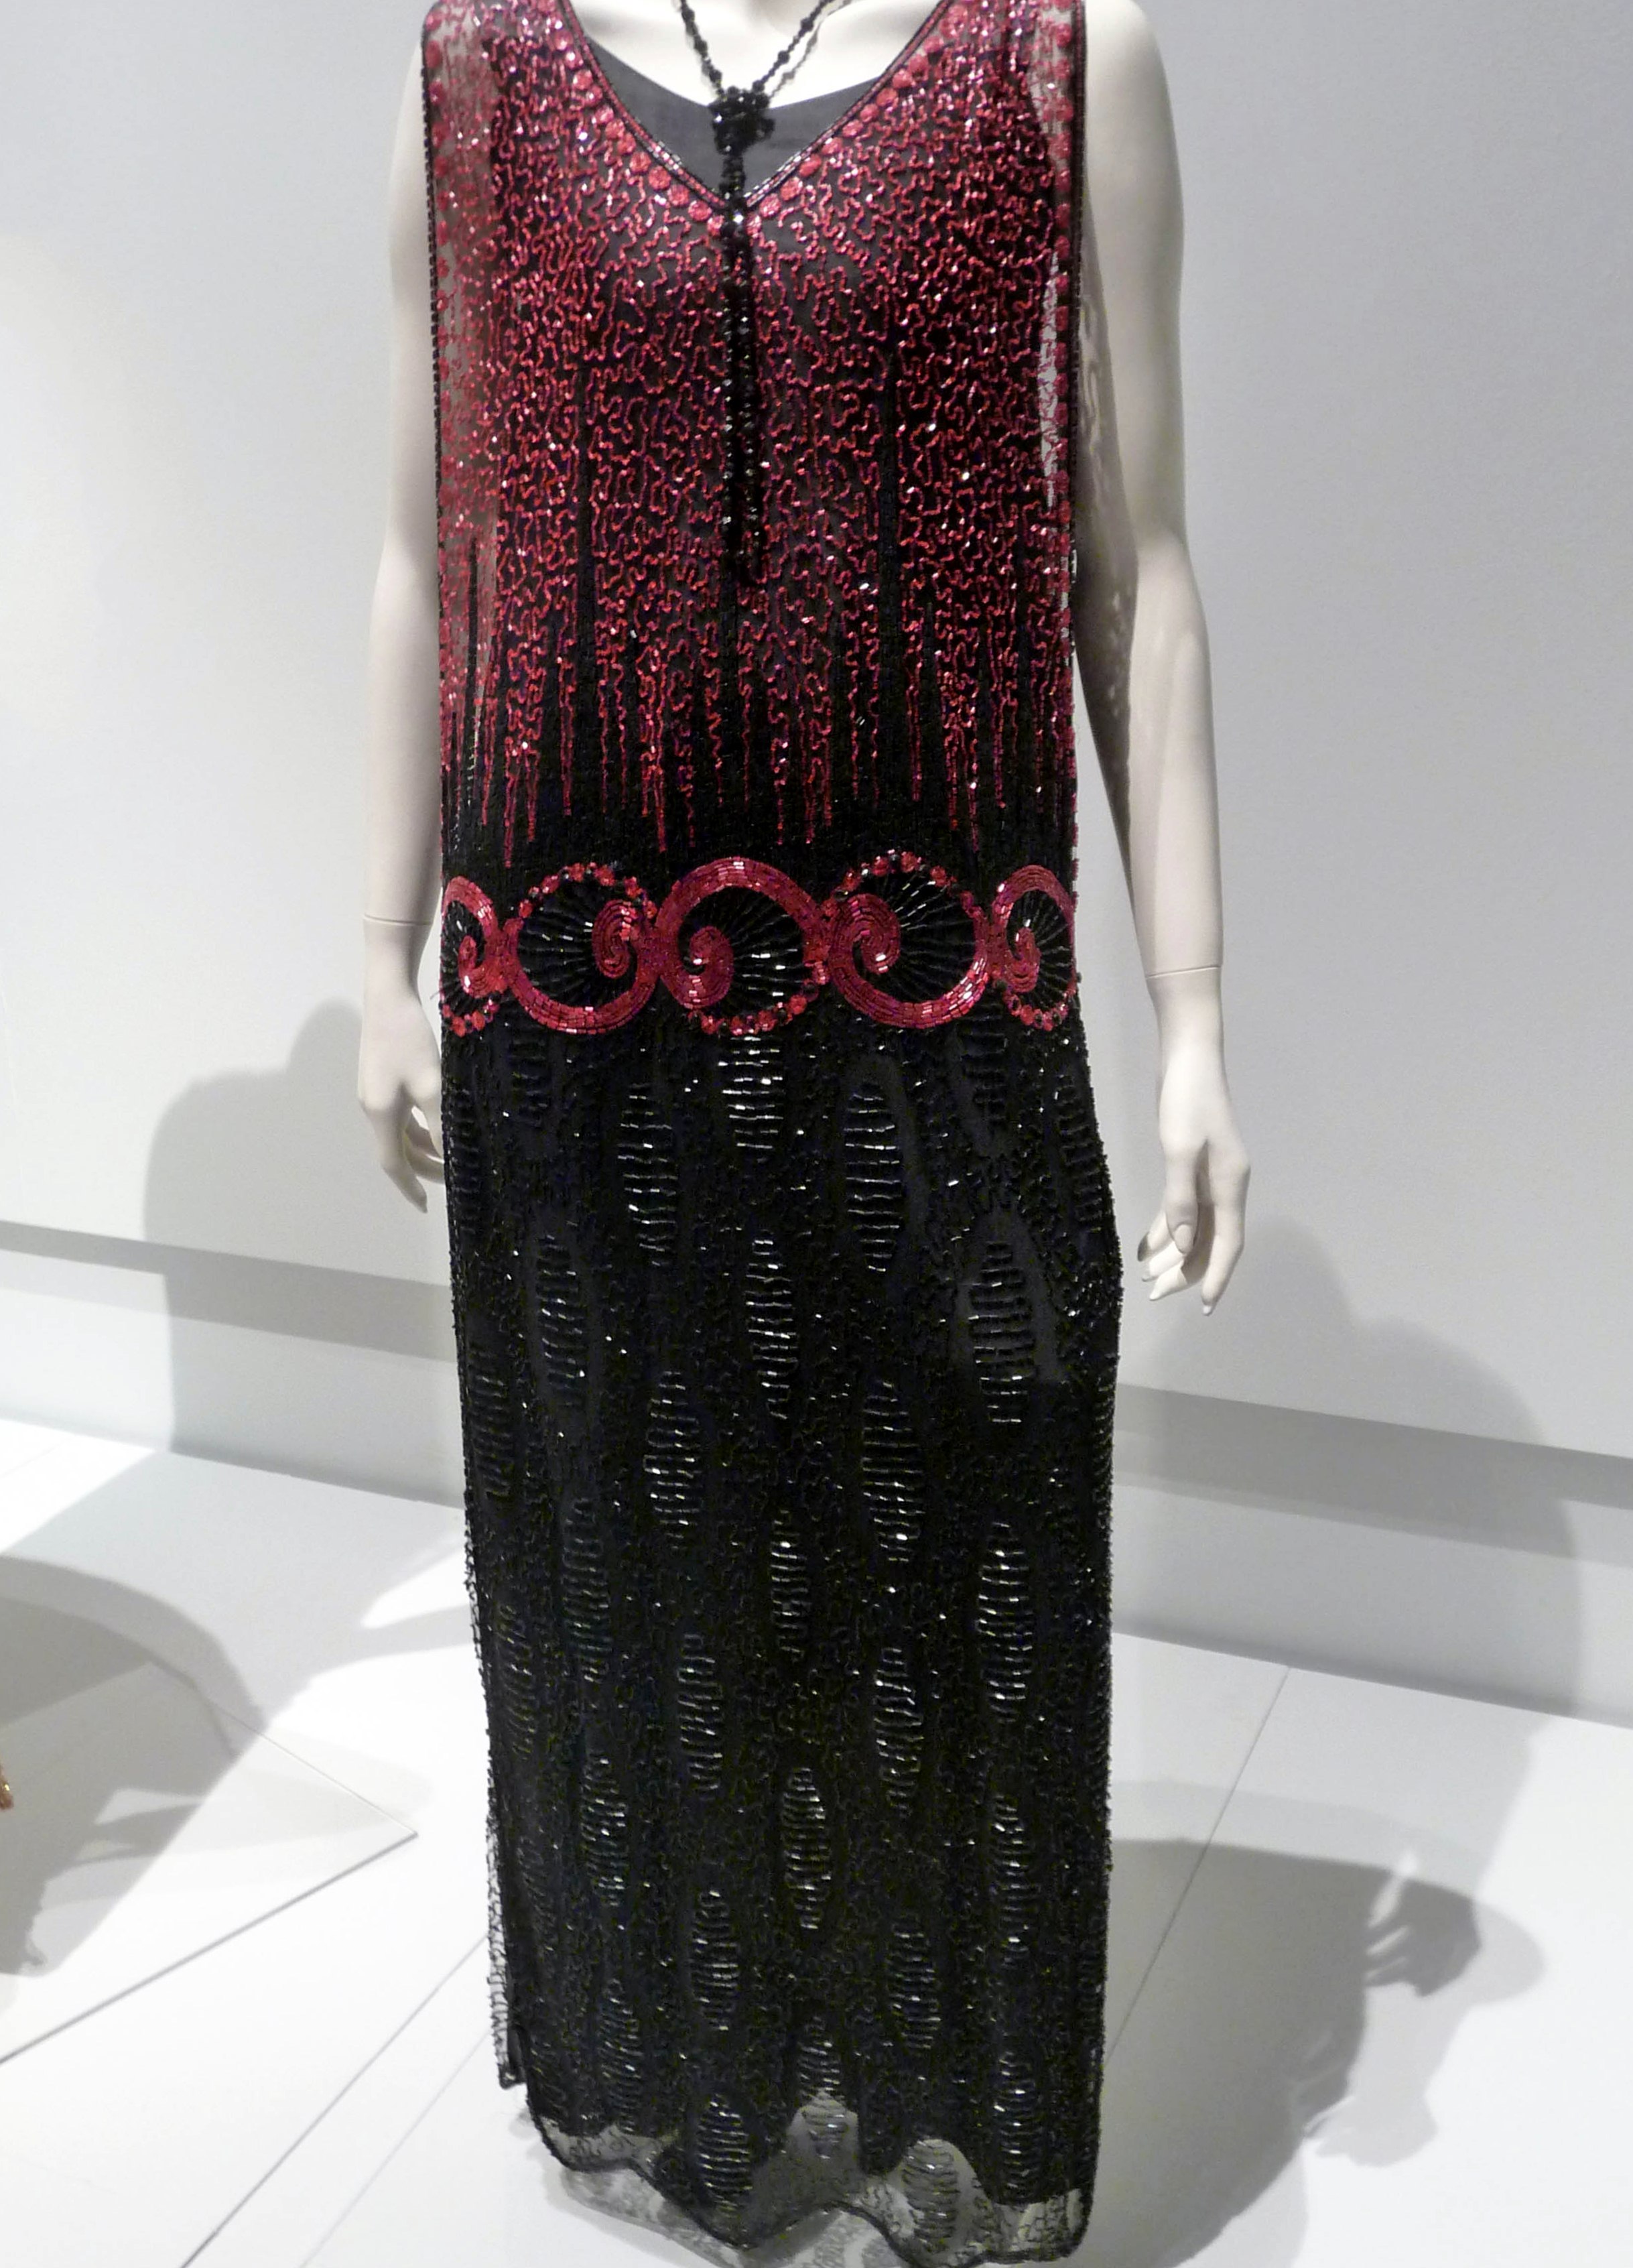 TUNIC-STYLE EVENING DRESS, silk net embroidered with glass bugle beads, rayon silk under-slip, circa 1921-23.